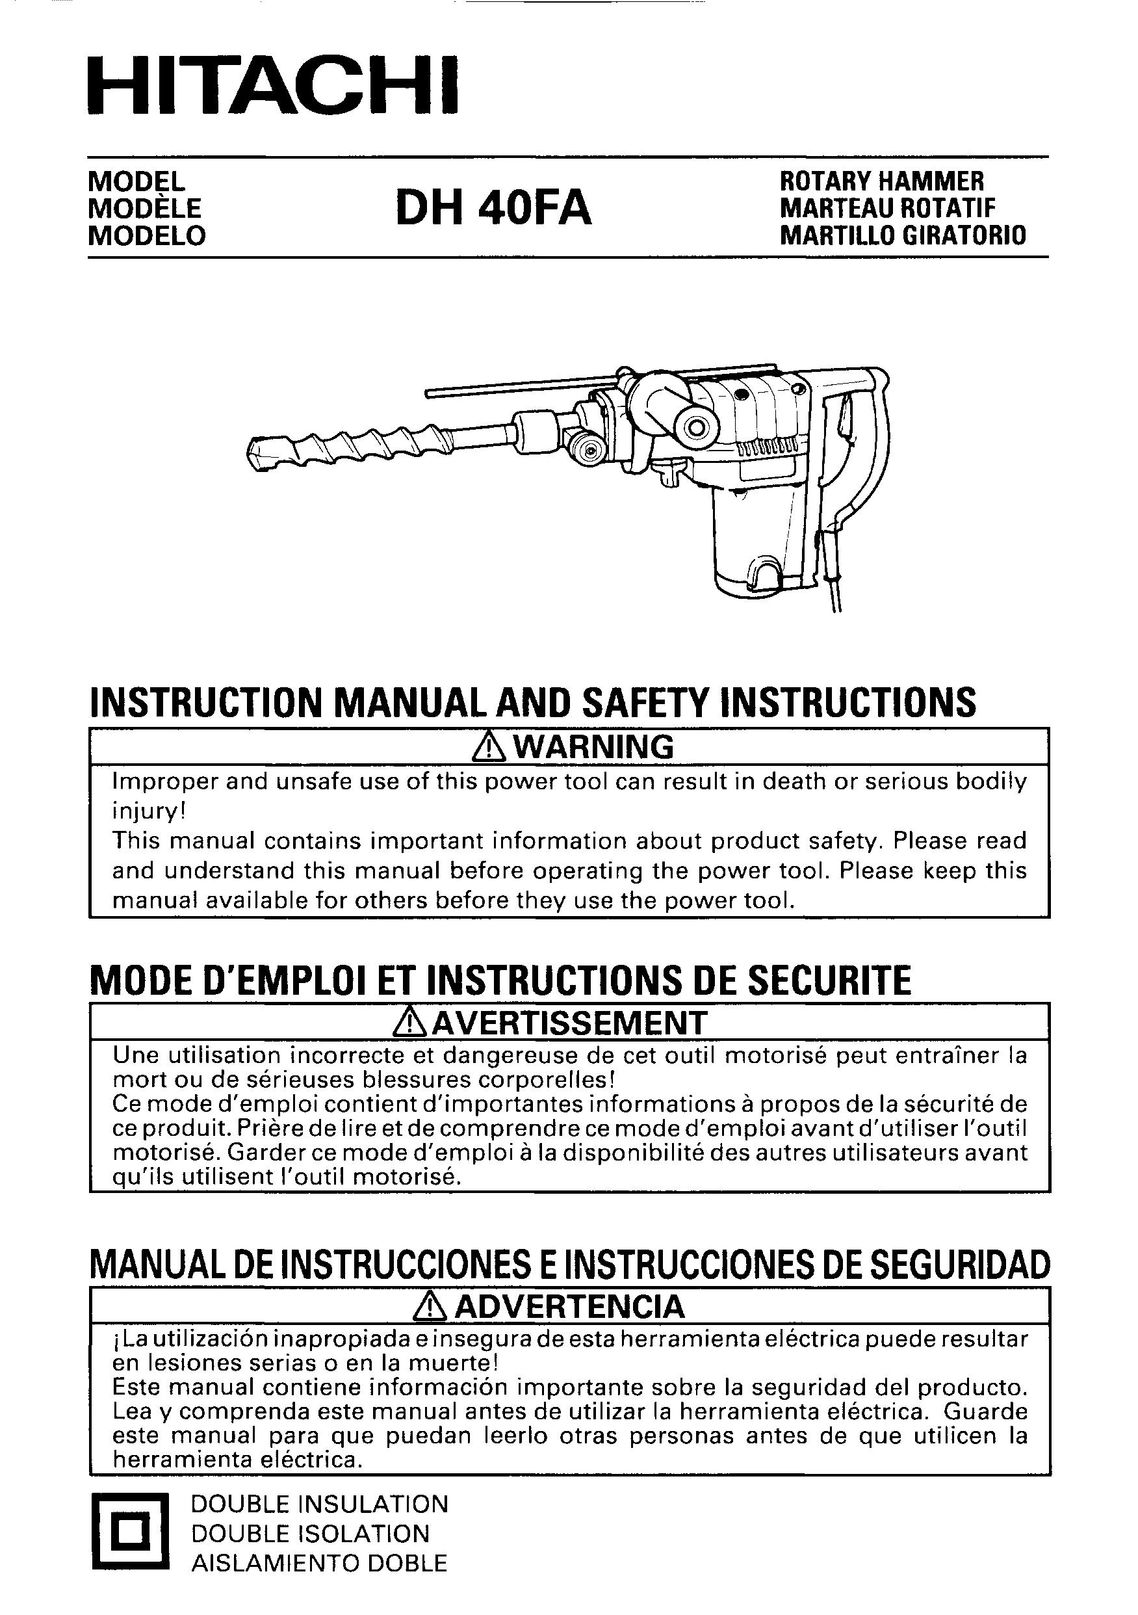 Hitachi DH 40FA Power Hammer User Manual